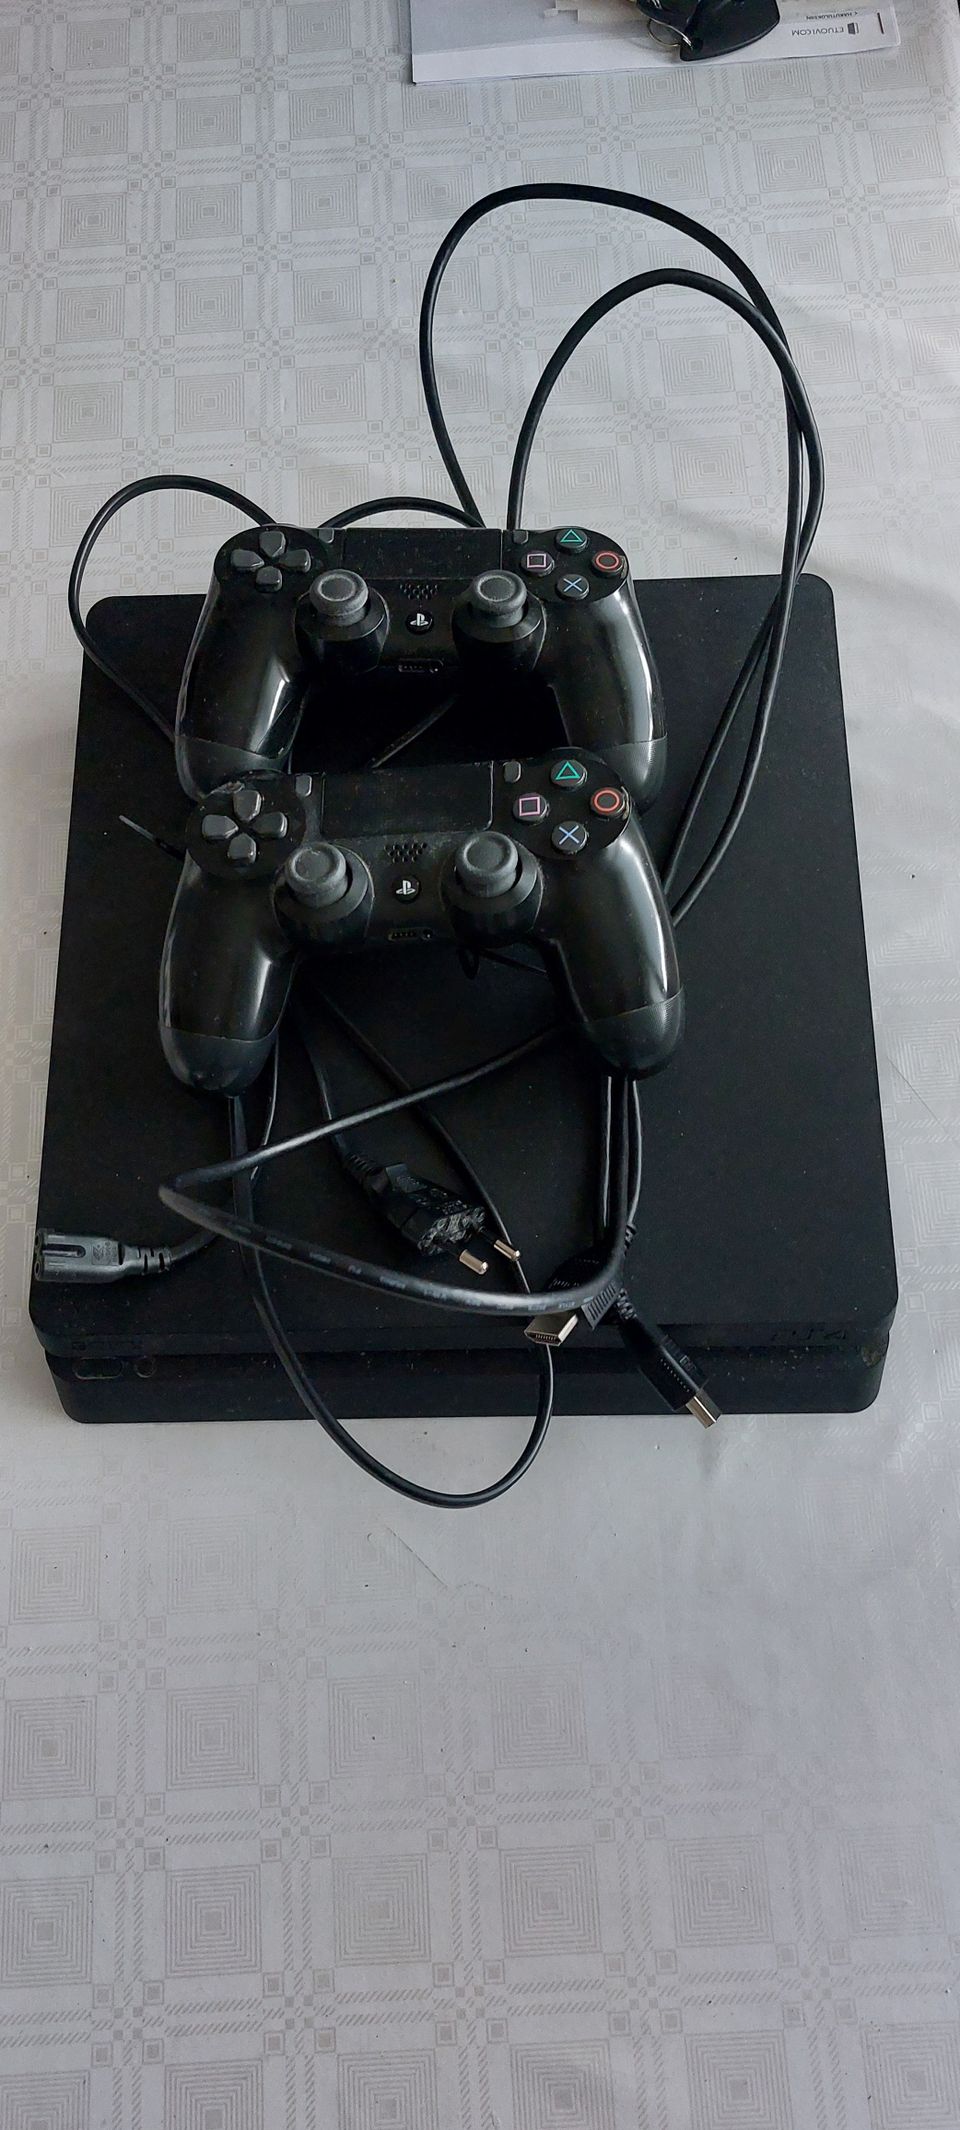 PlayStation 4- pelikonsoli